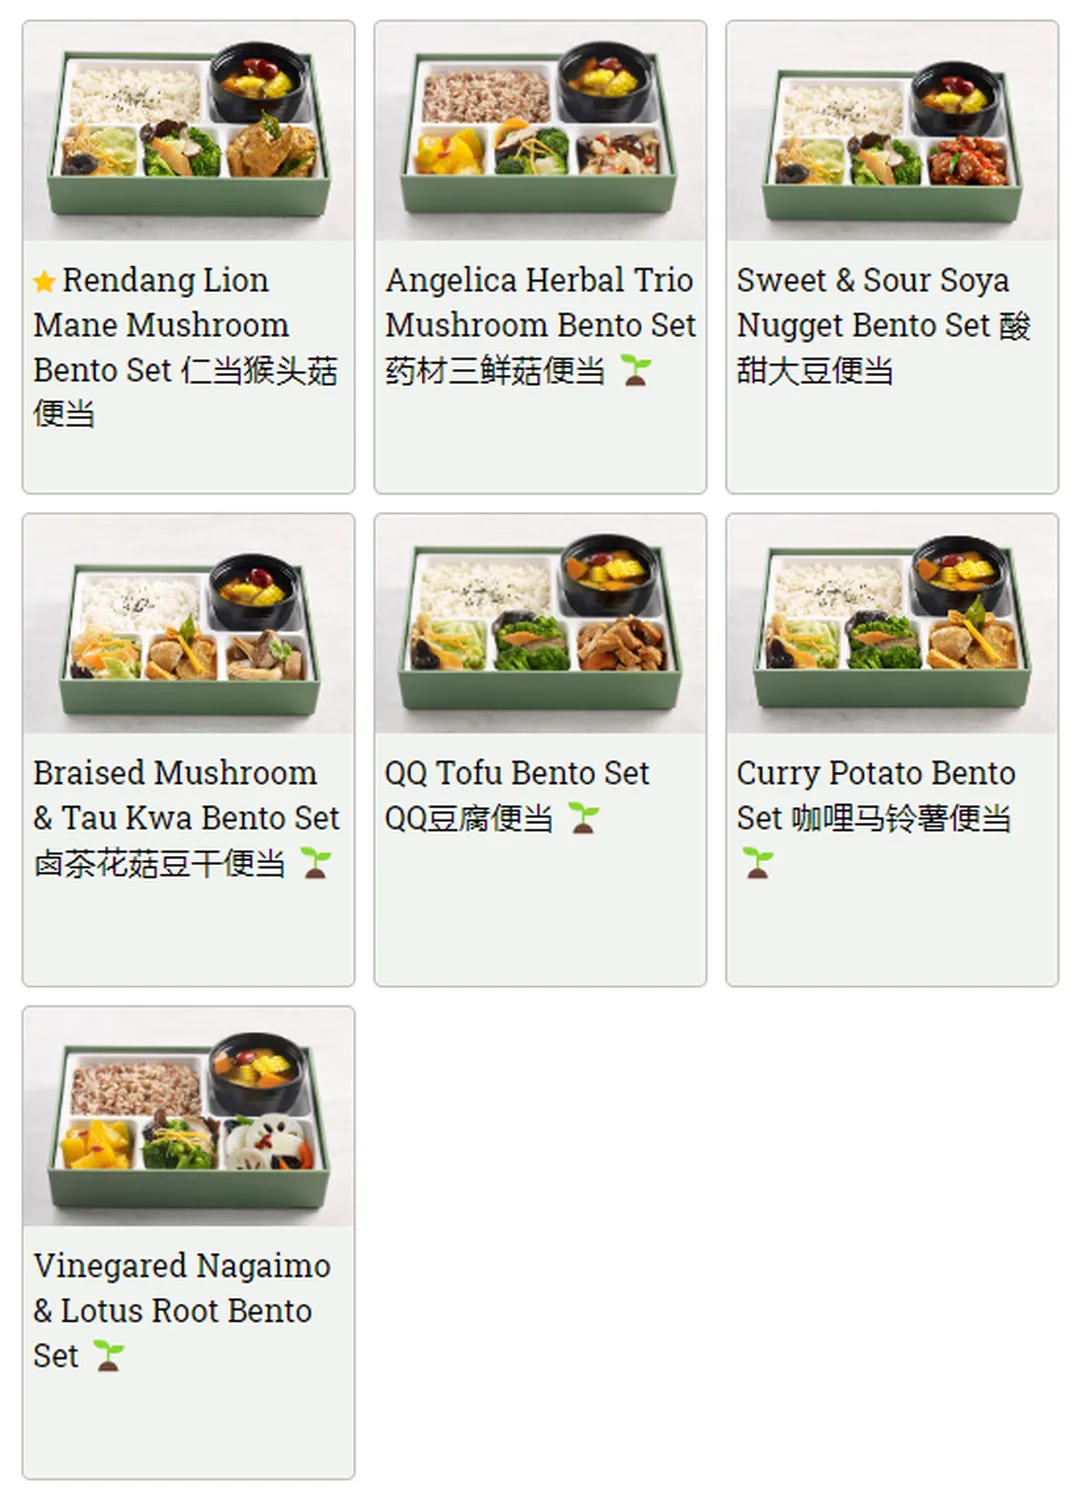 greendot menu singapore bento sets